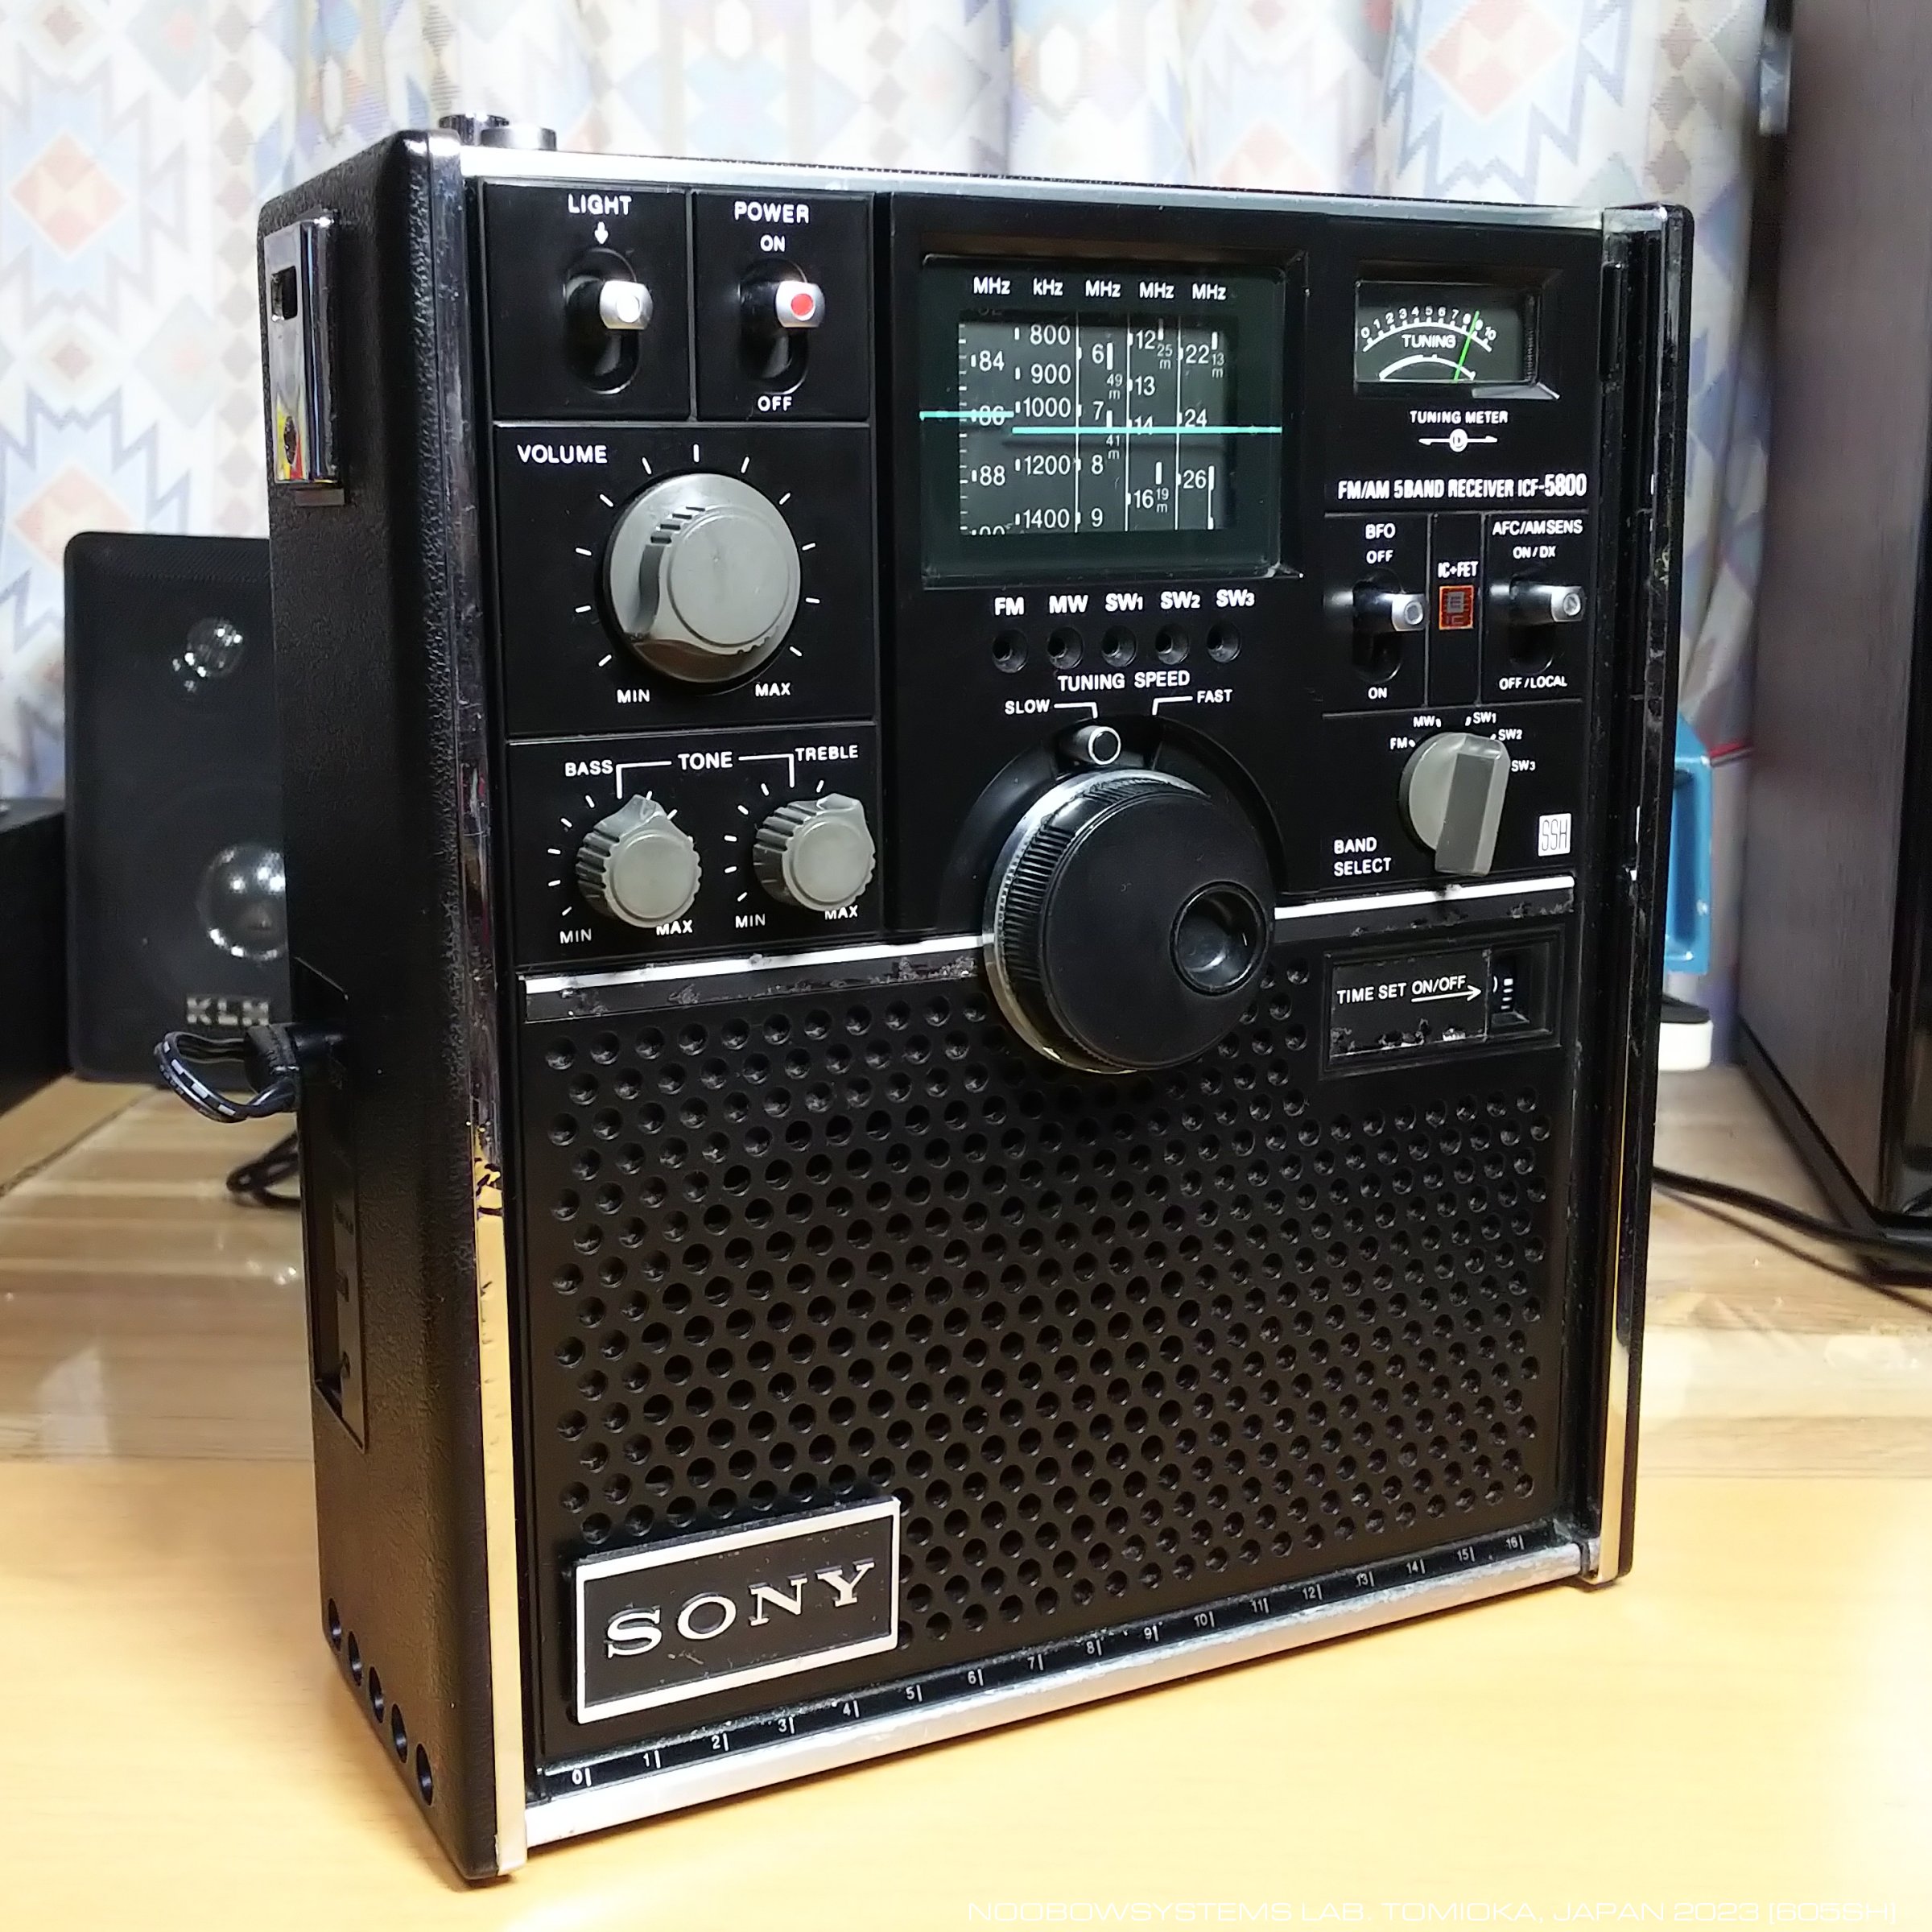 SONY ICF-5800 ラジオ 【ハードオフ大泉学園】 - オーディオ